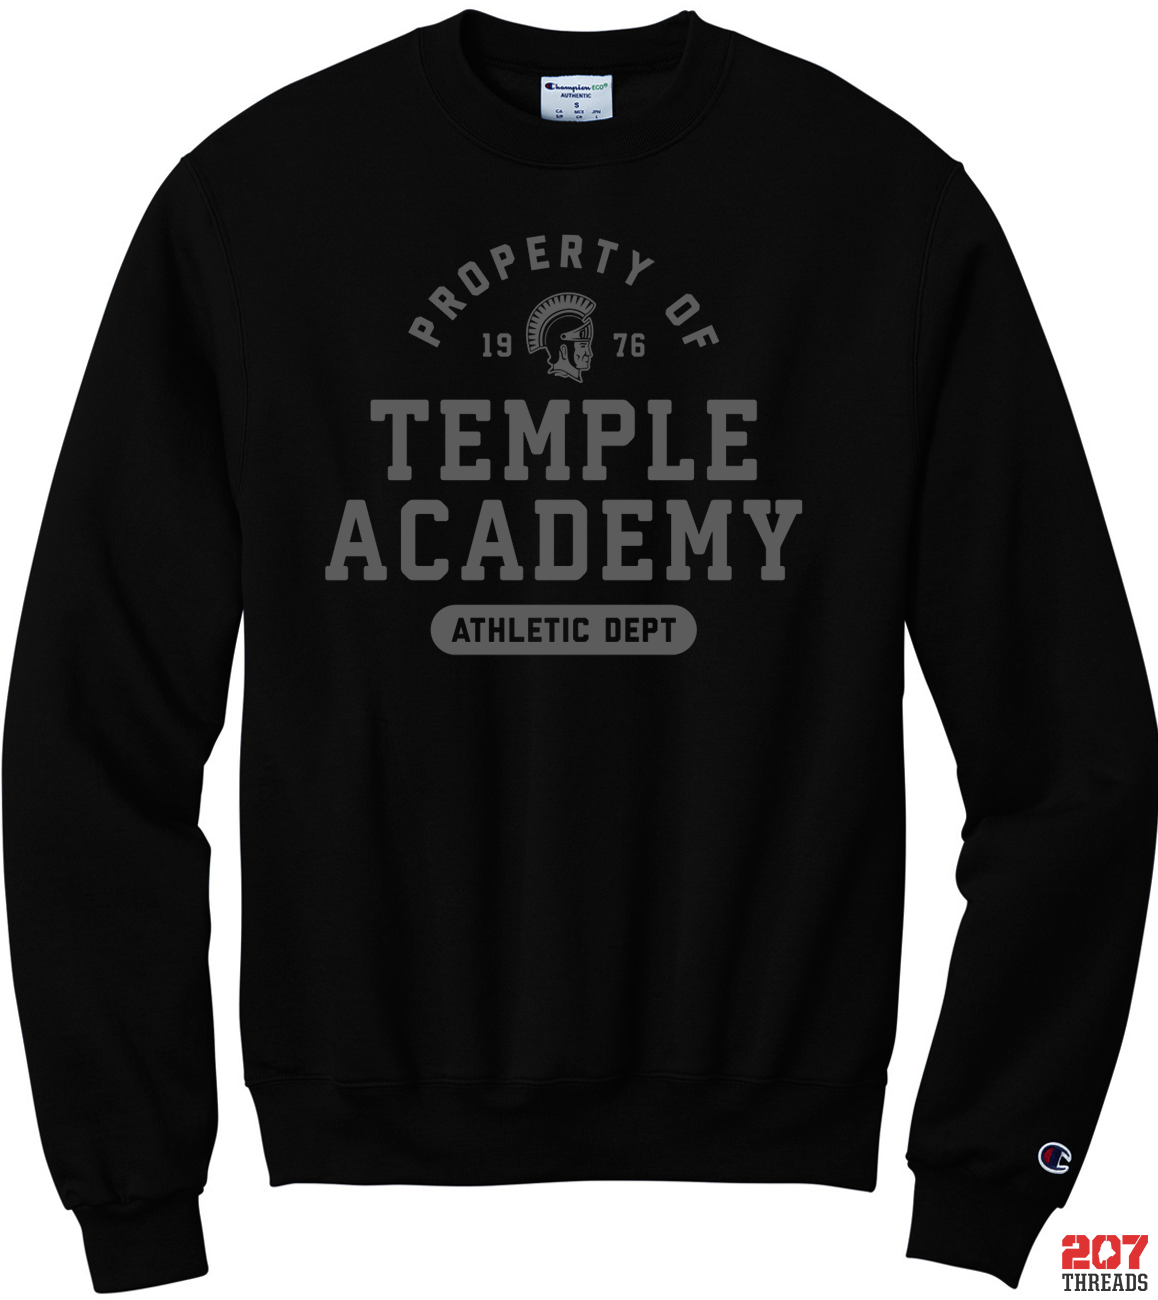 Property of Temple Academy Athletics Dept Sweatshirt